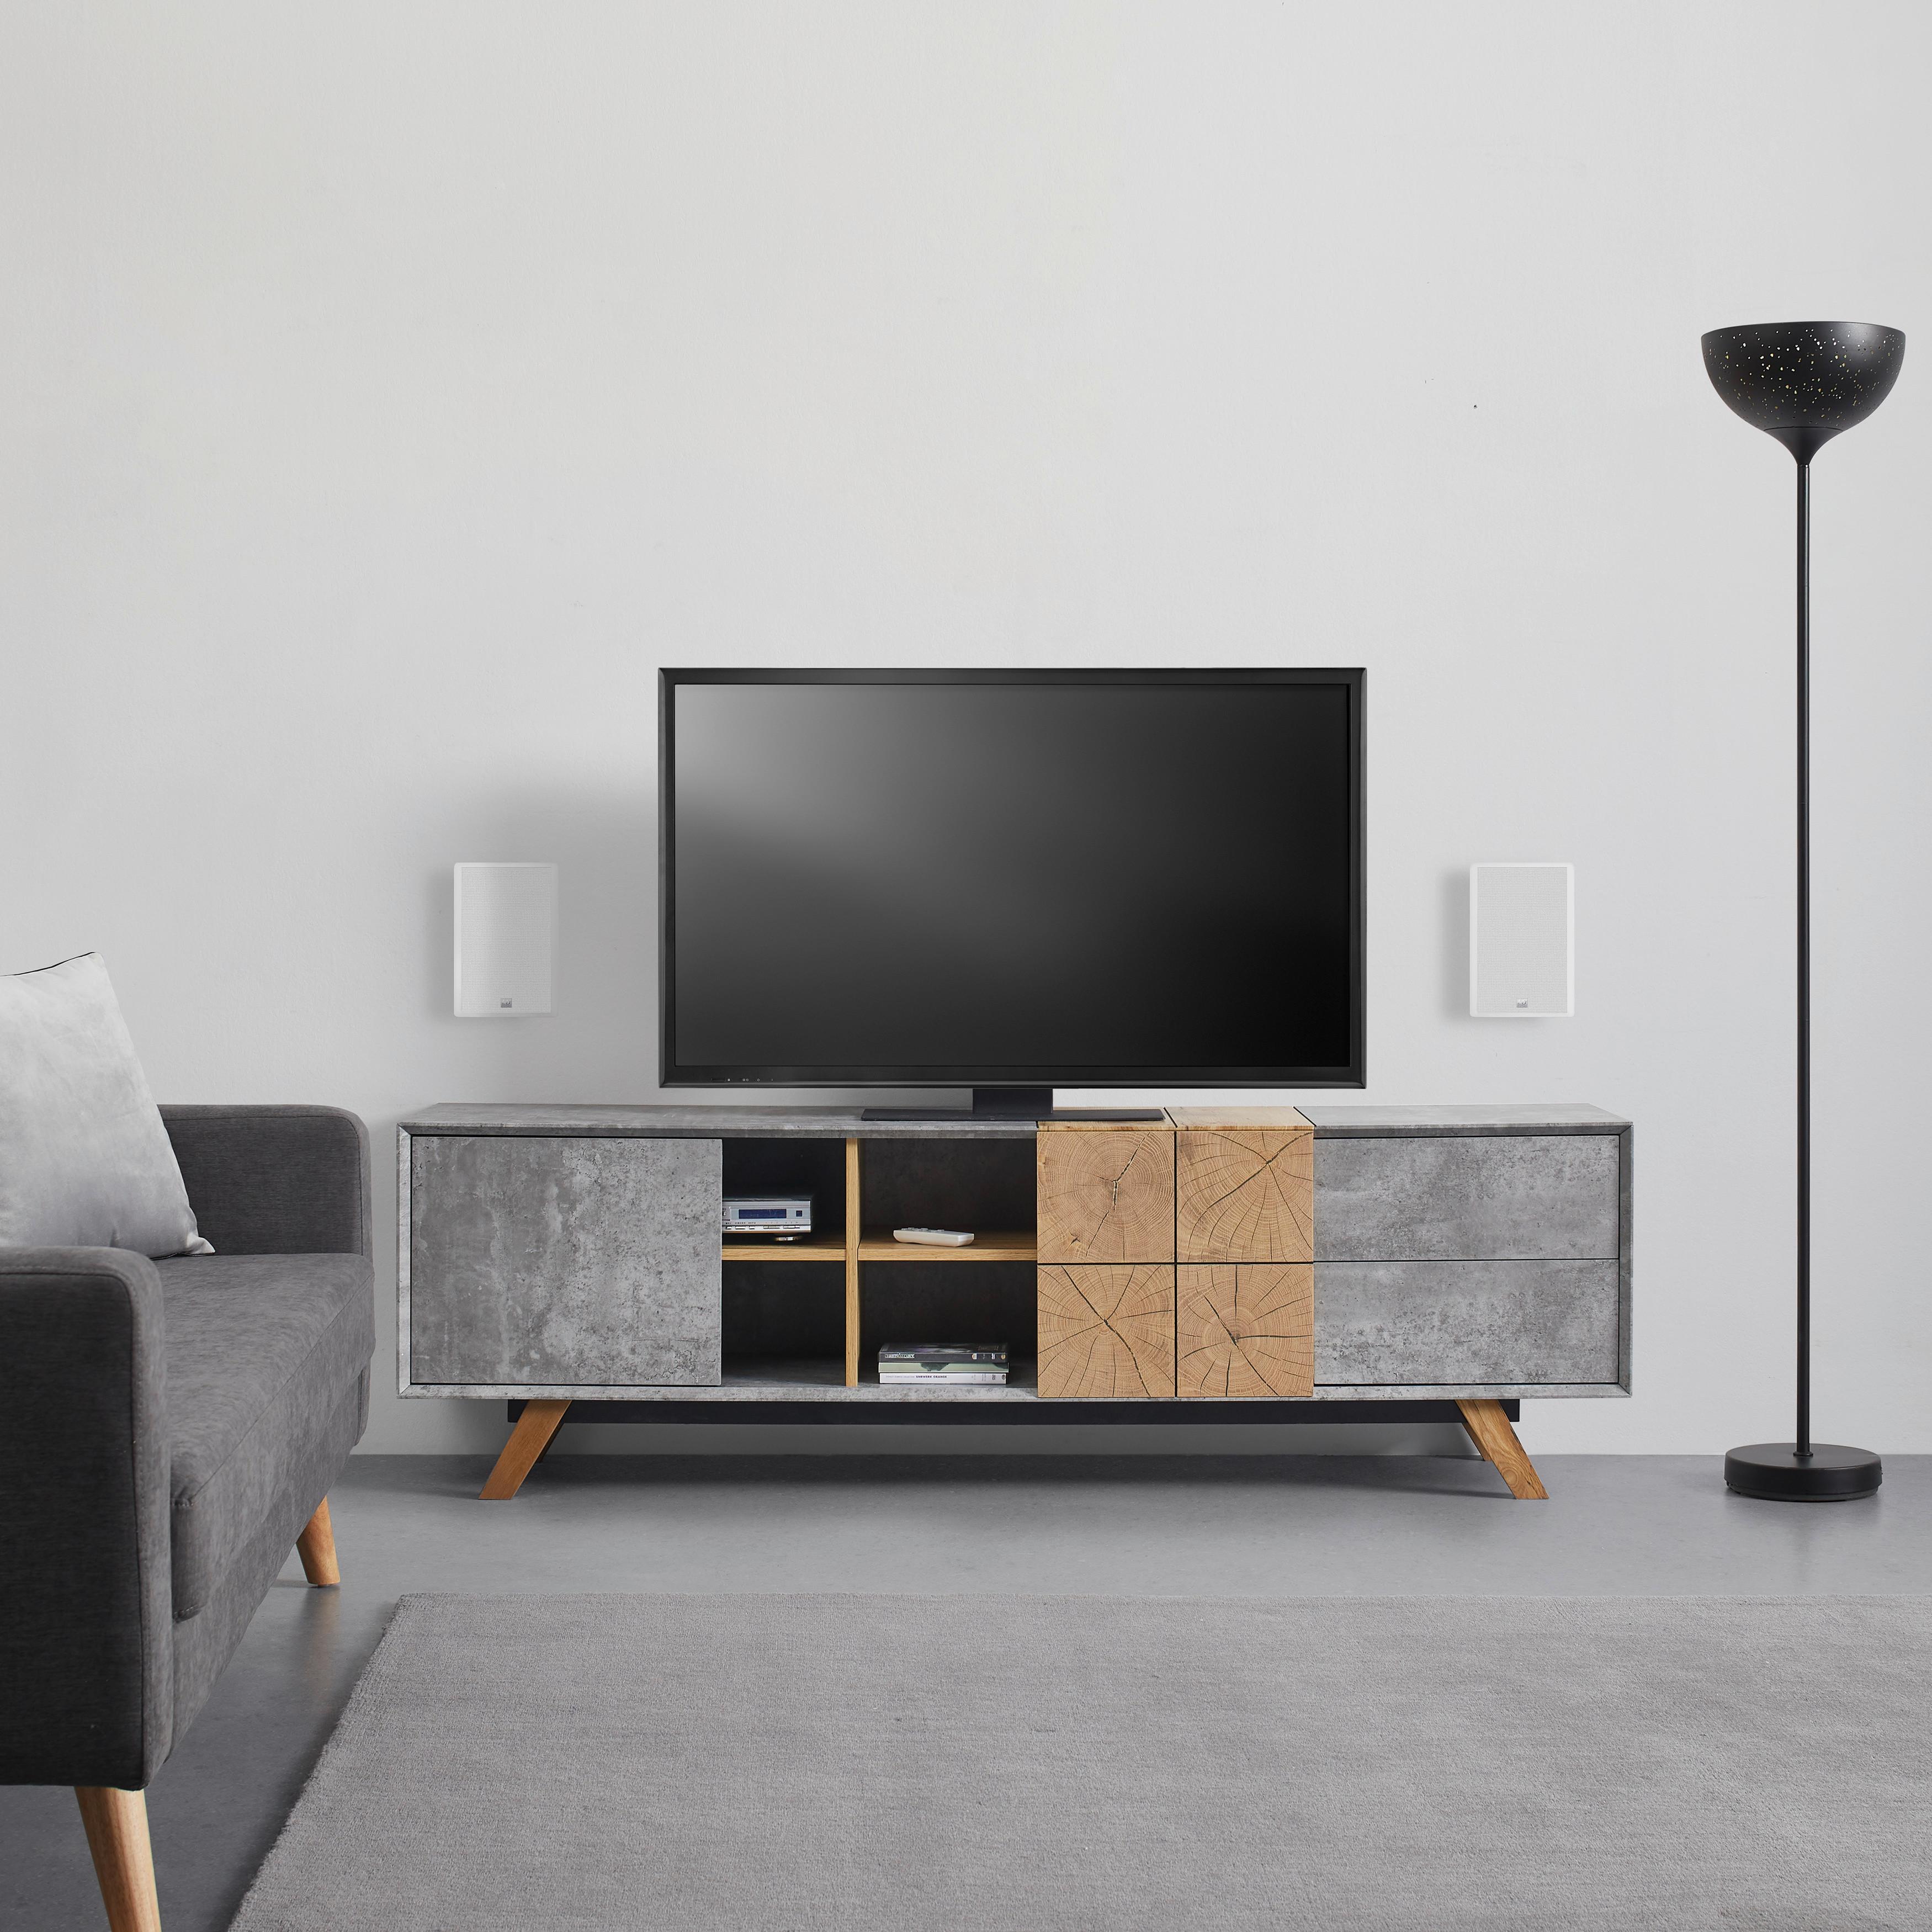 TV-Möbel CASPER grau Betonoptik, eichefarben - Eichefarben/Grau, Modern, Holz (180/55/40cm) - Bessagi Home